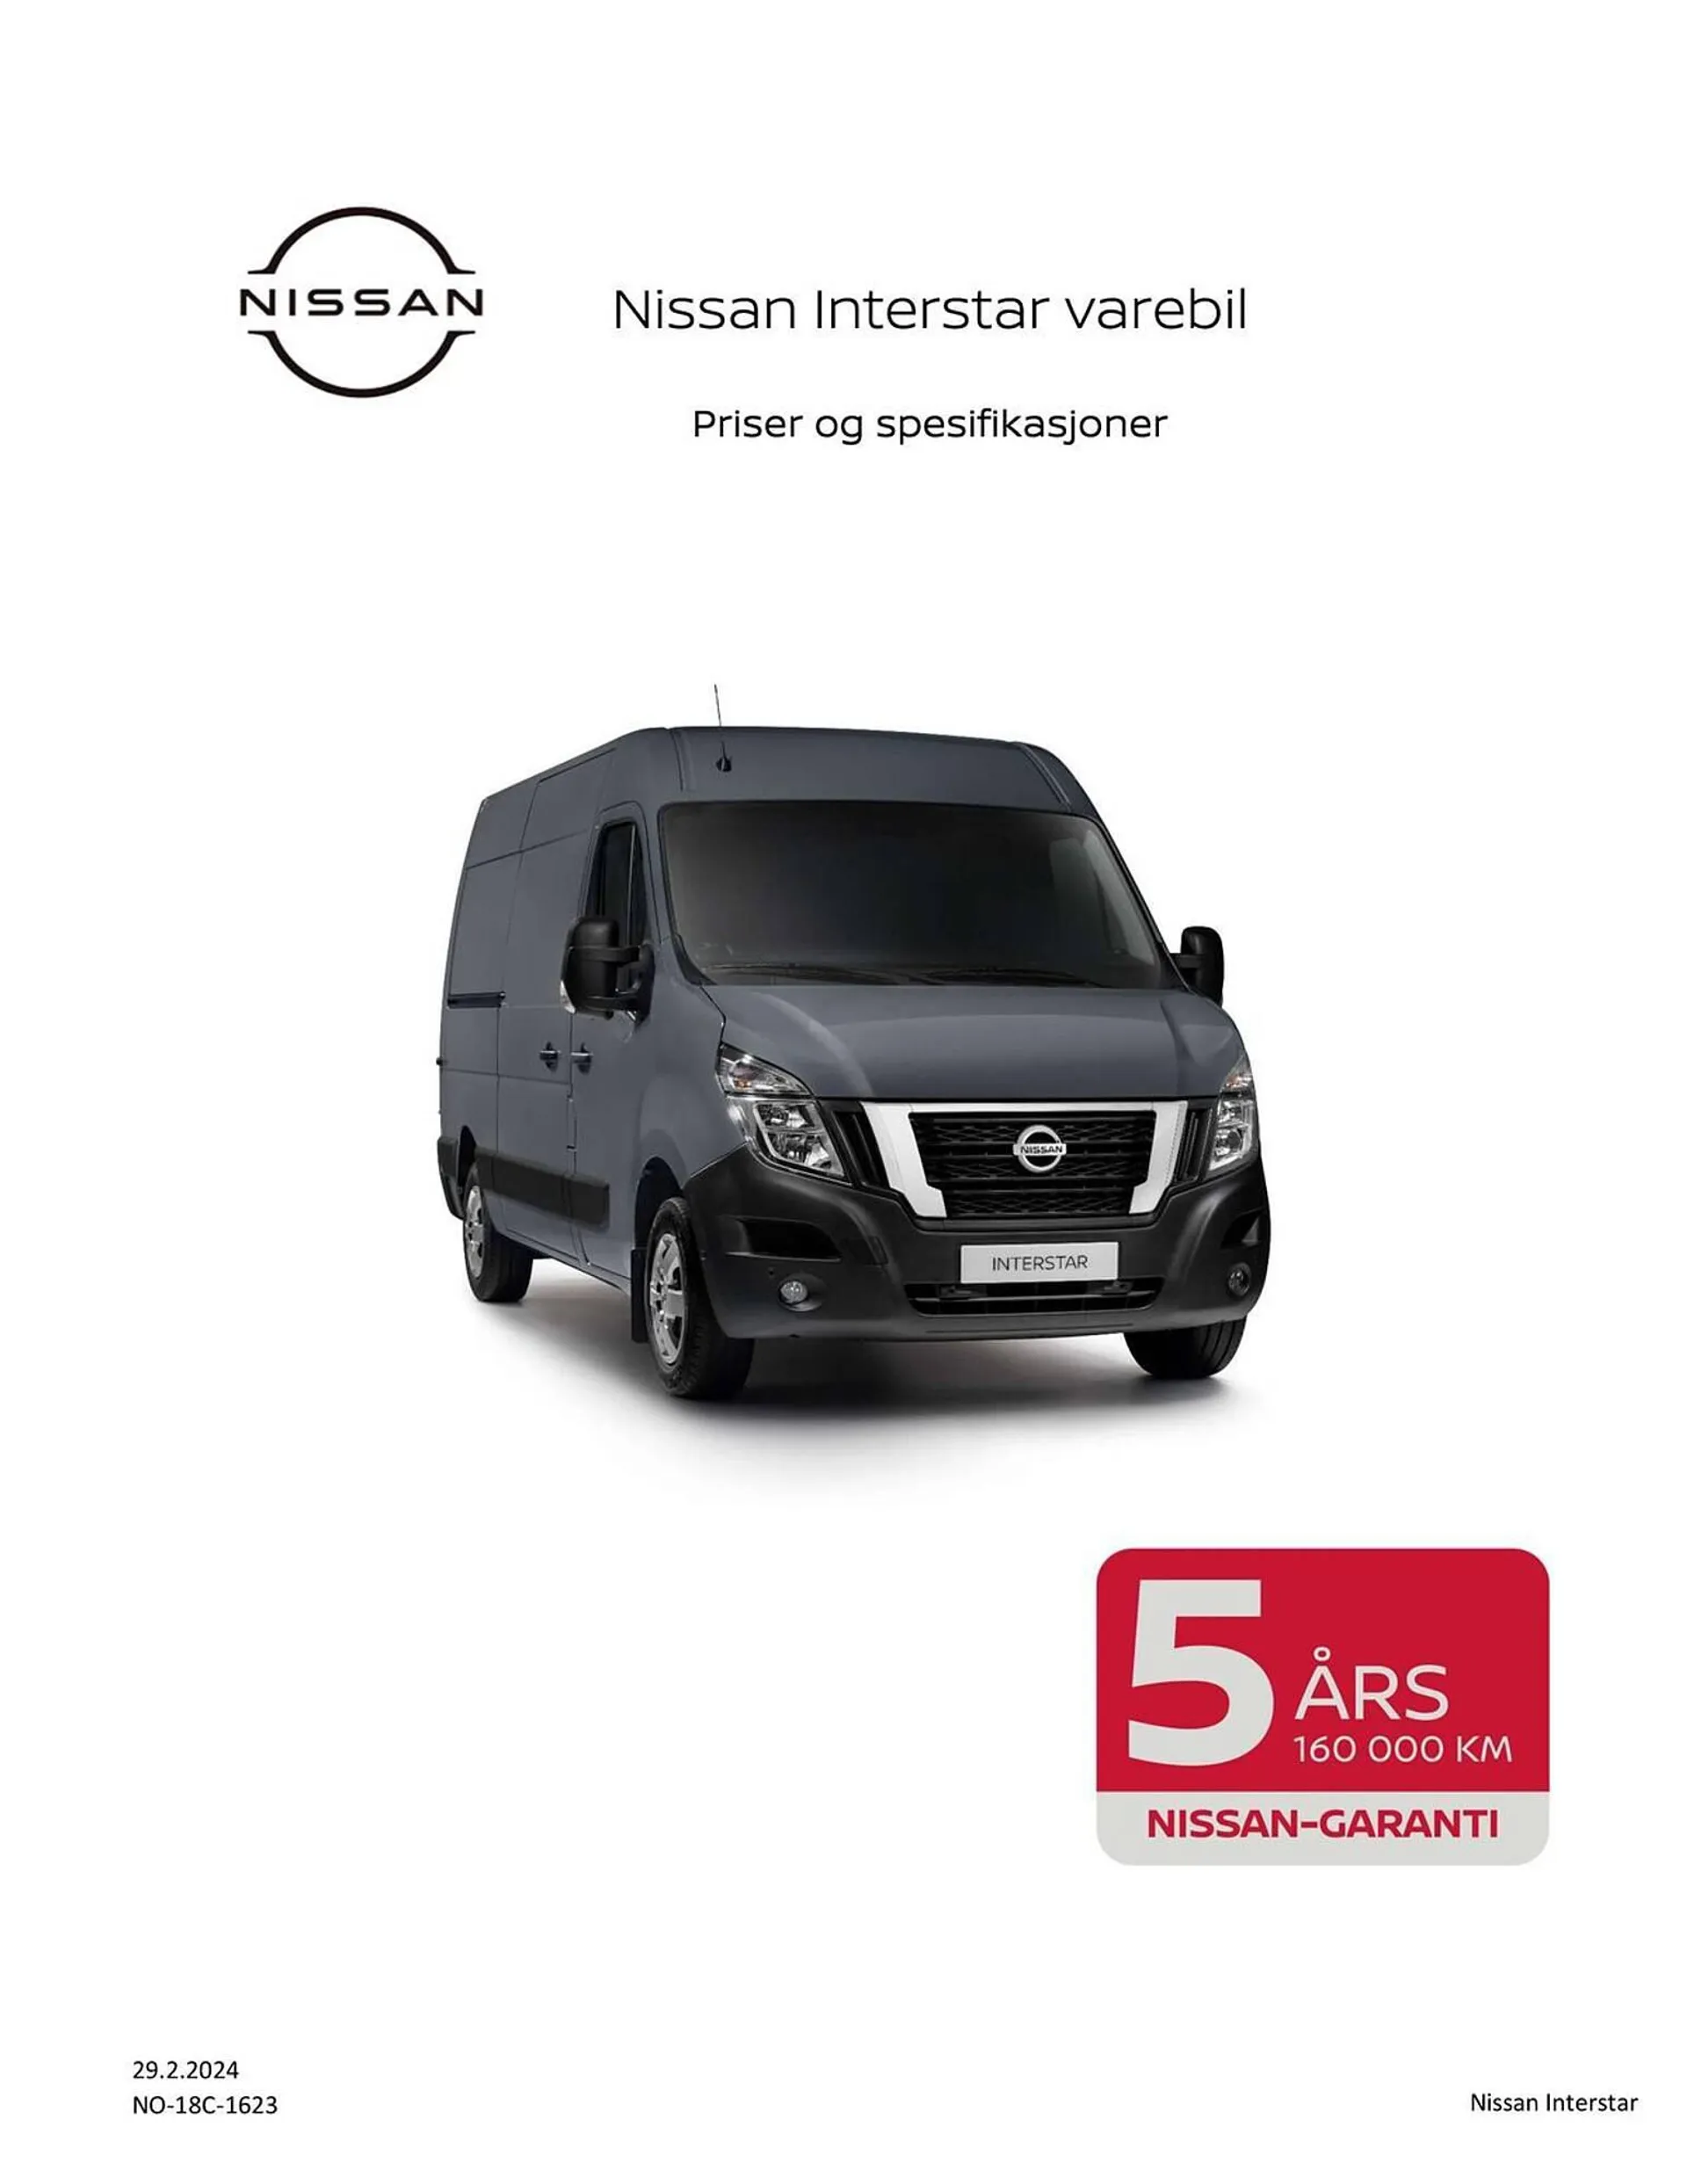 Nissan Kundeavis fra 13. mars til 13. mars 2025 - kundeavisside 